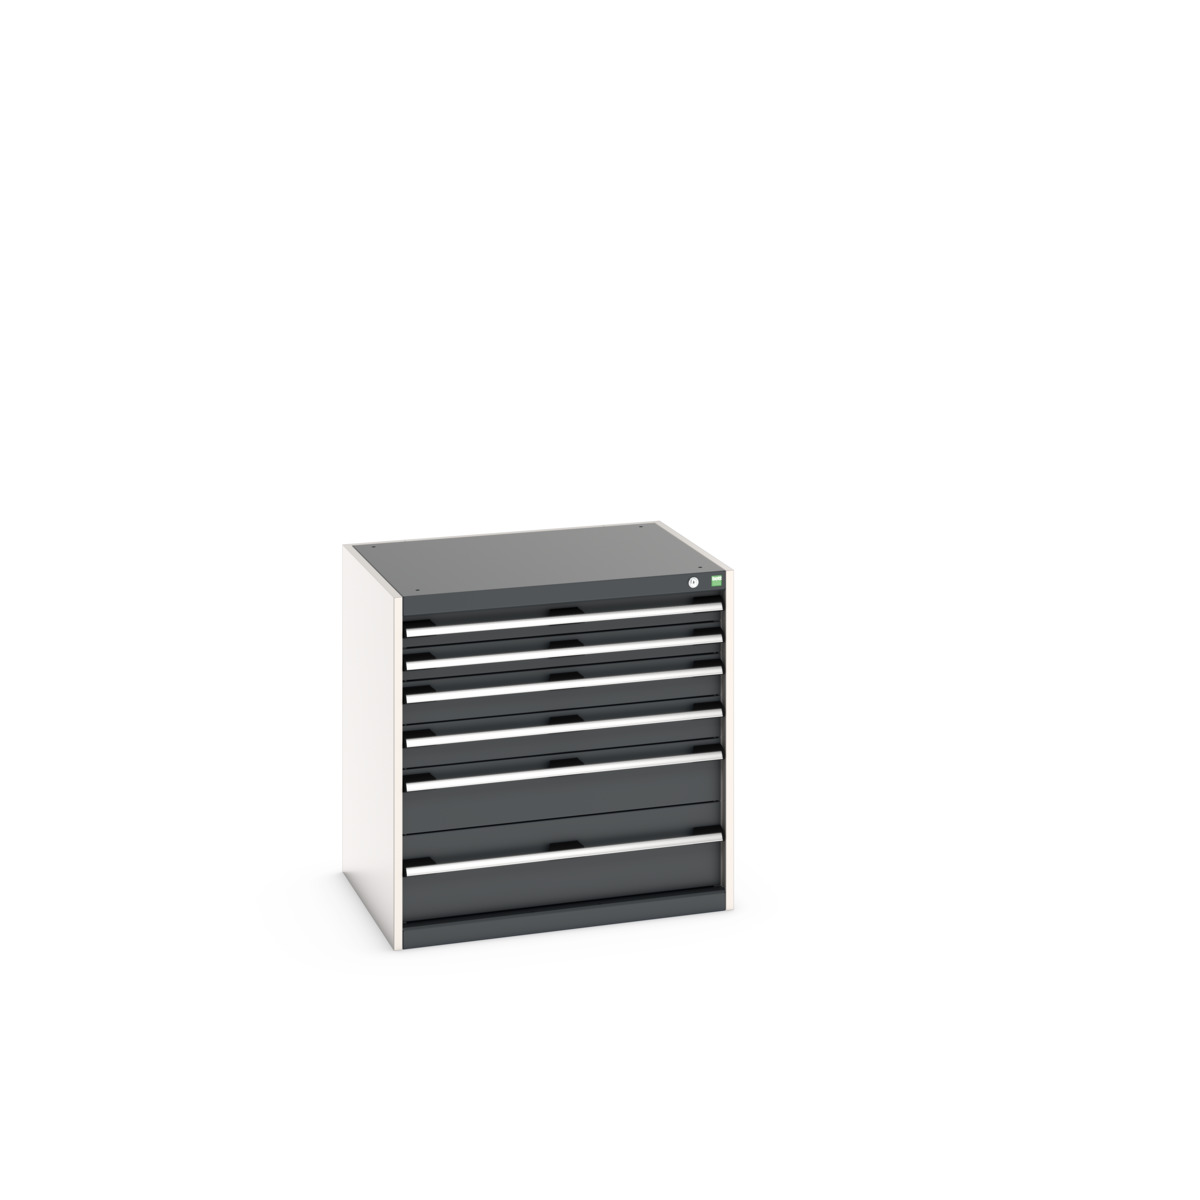 40020129. - cubio drawer cabinet